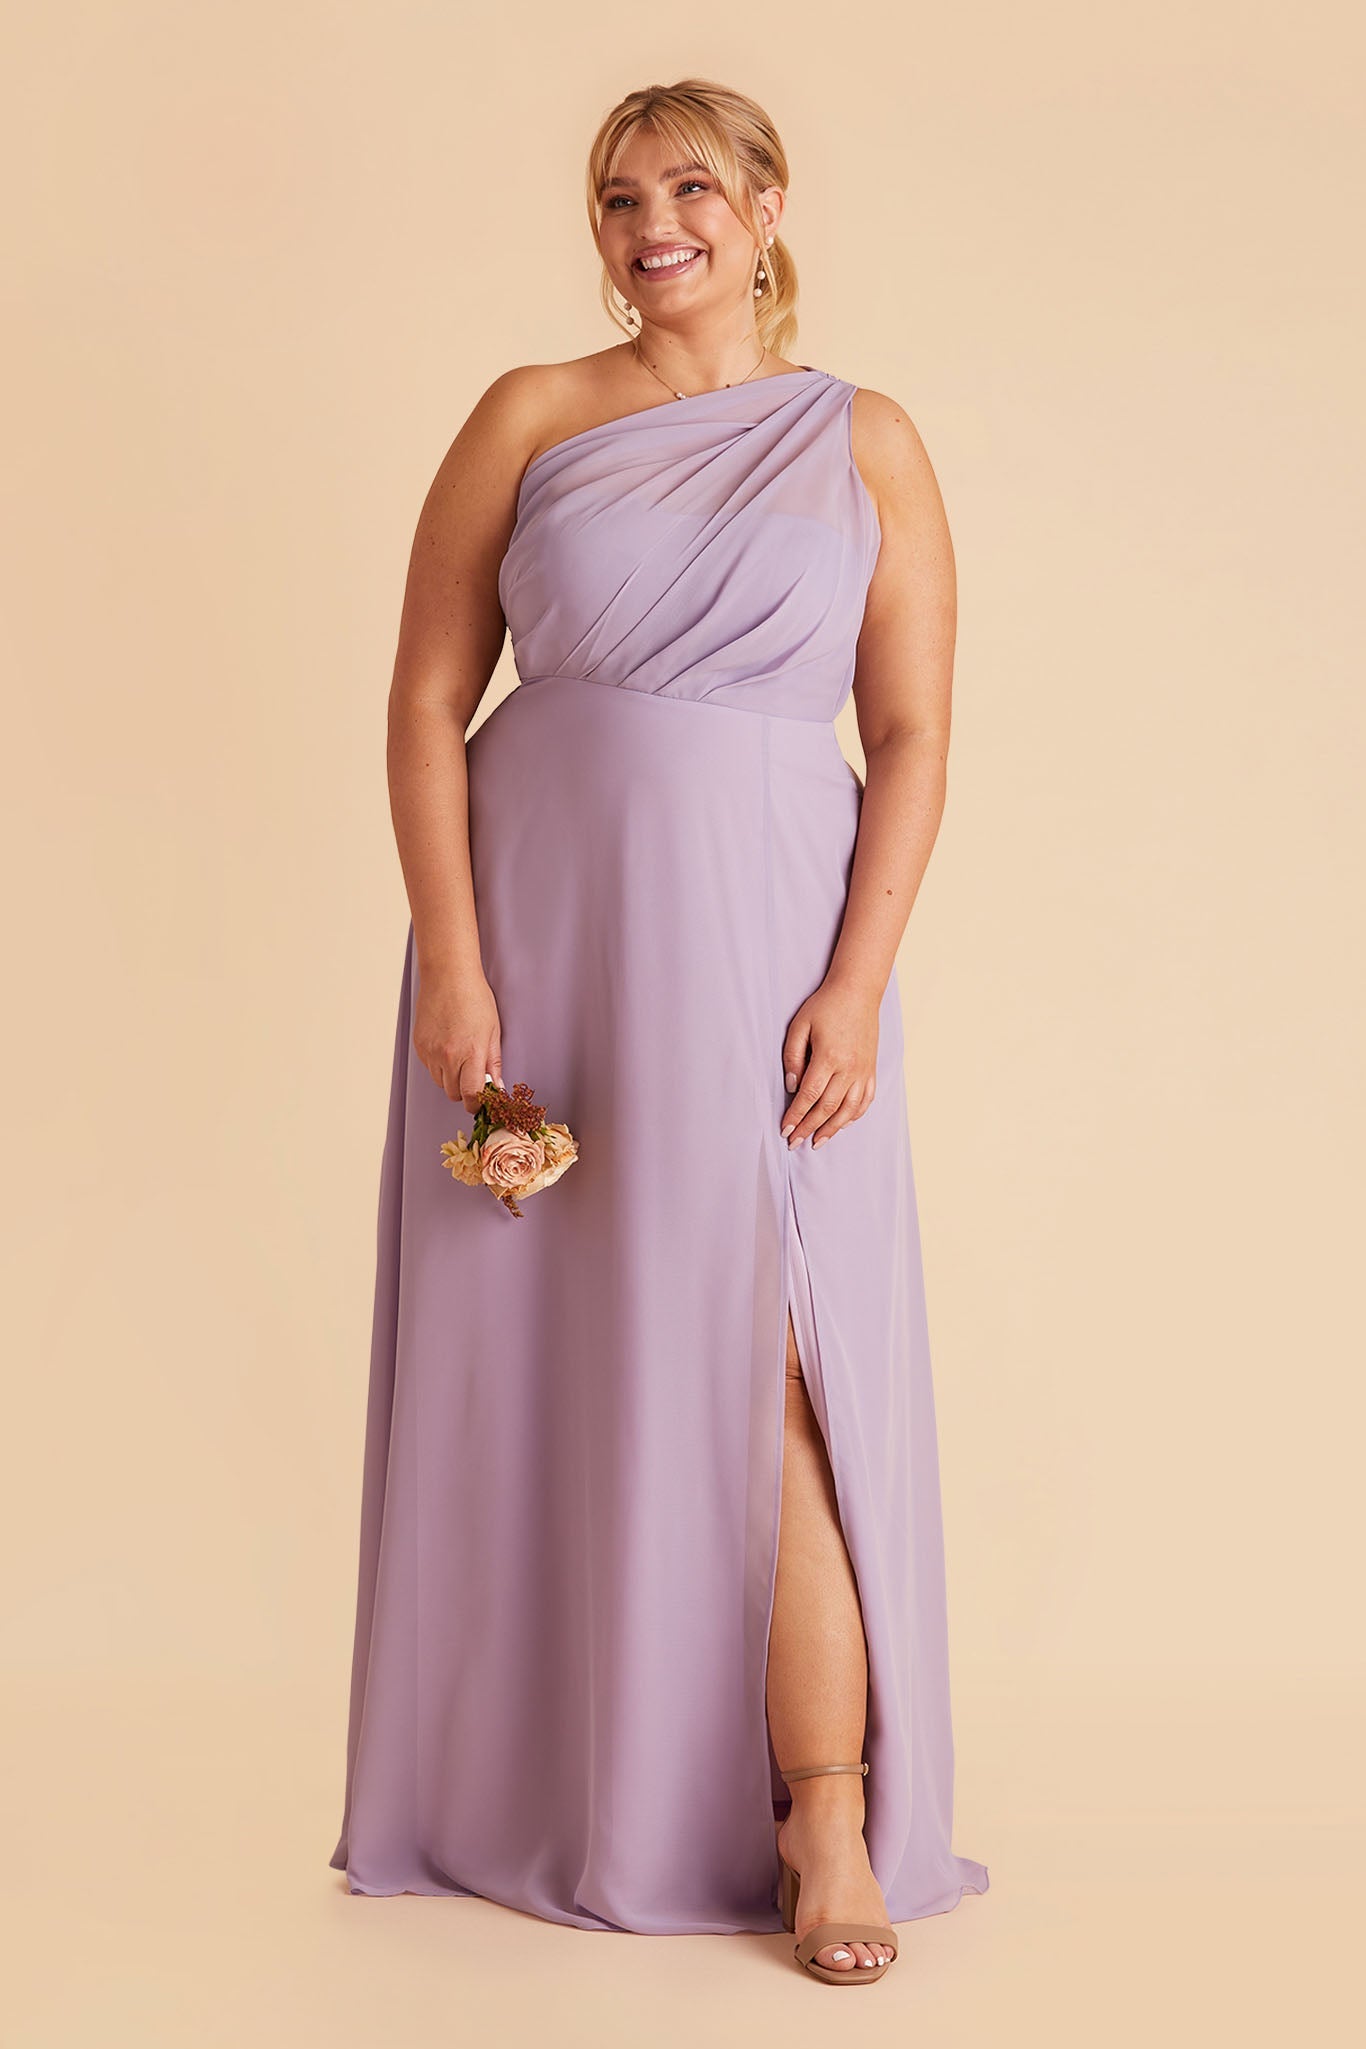 LAVENDER HAZE Bridesmaid Dress/ CUSTOM/ Convertible Dress / Infinity Dress/  Multiway Dress/ Multi Wrap Dress / Plus Size / Petite/ Tall - Etsy